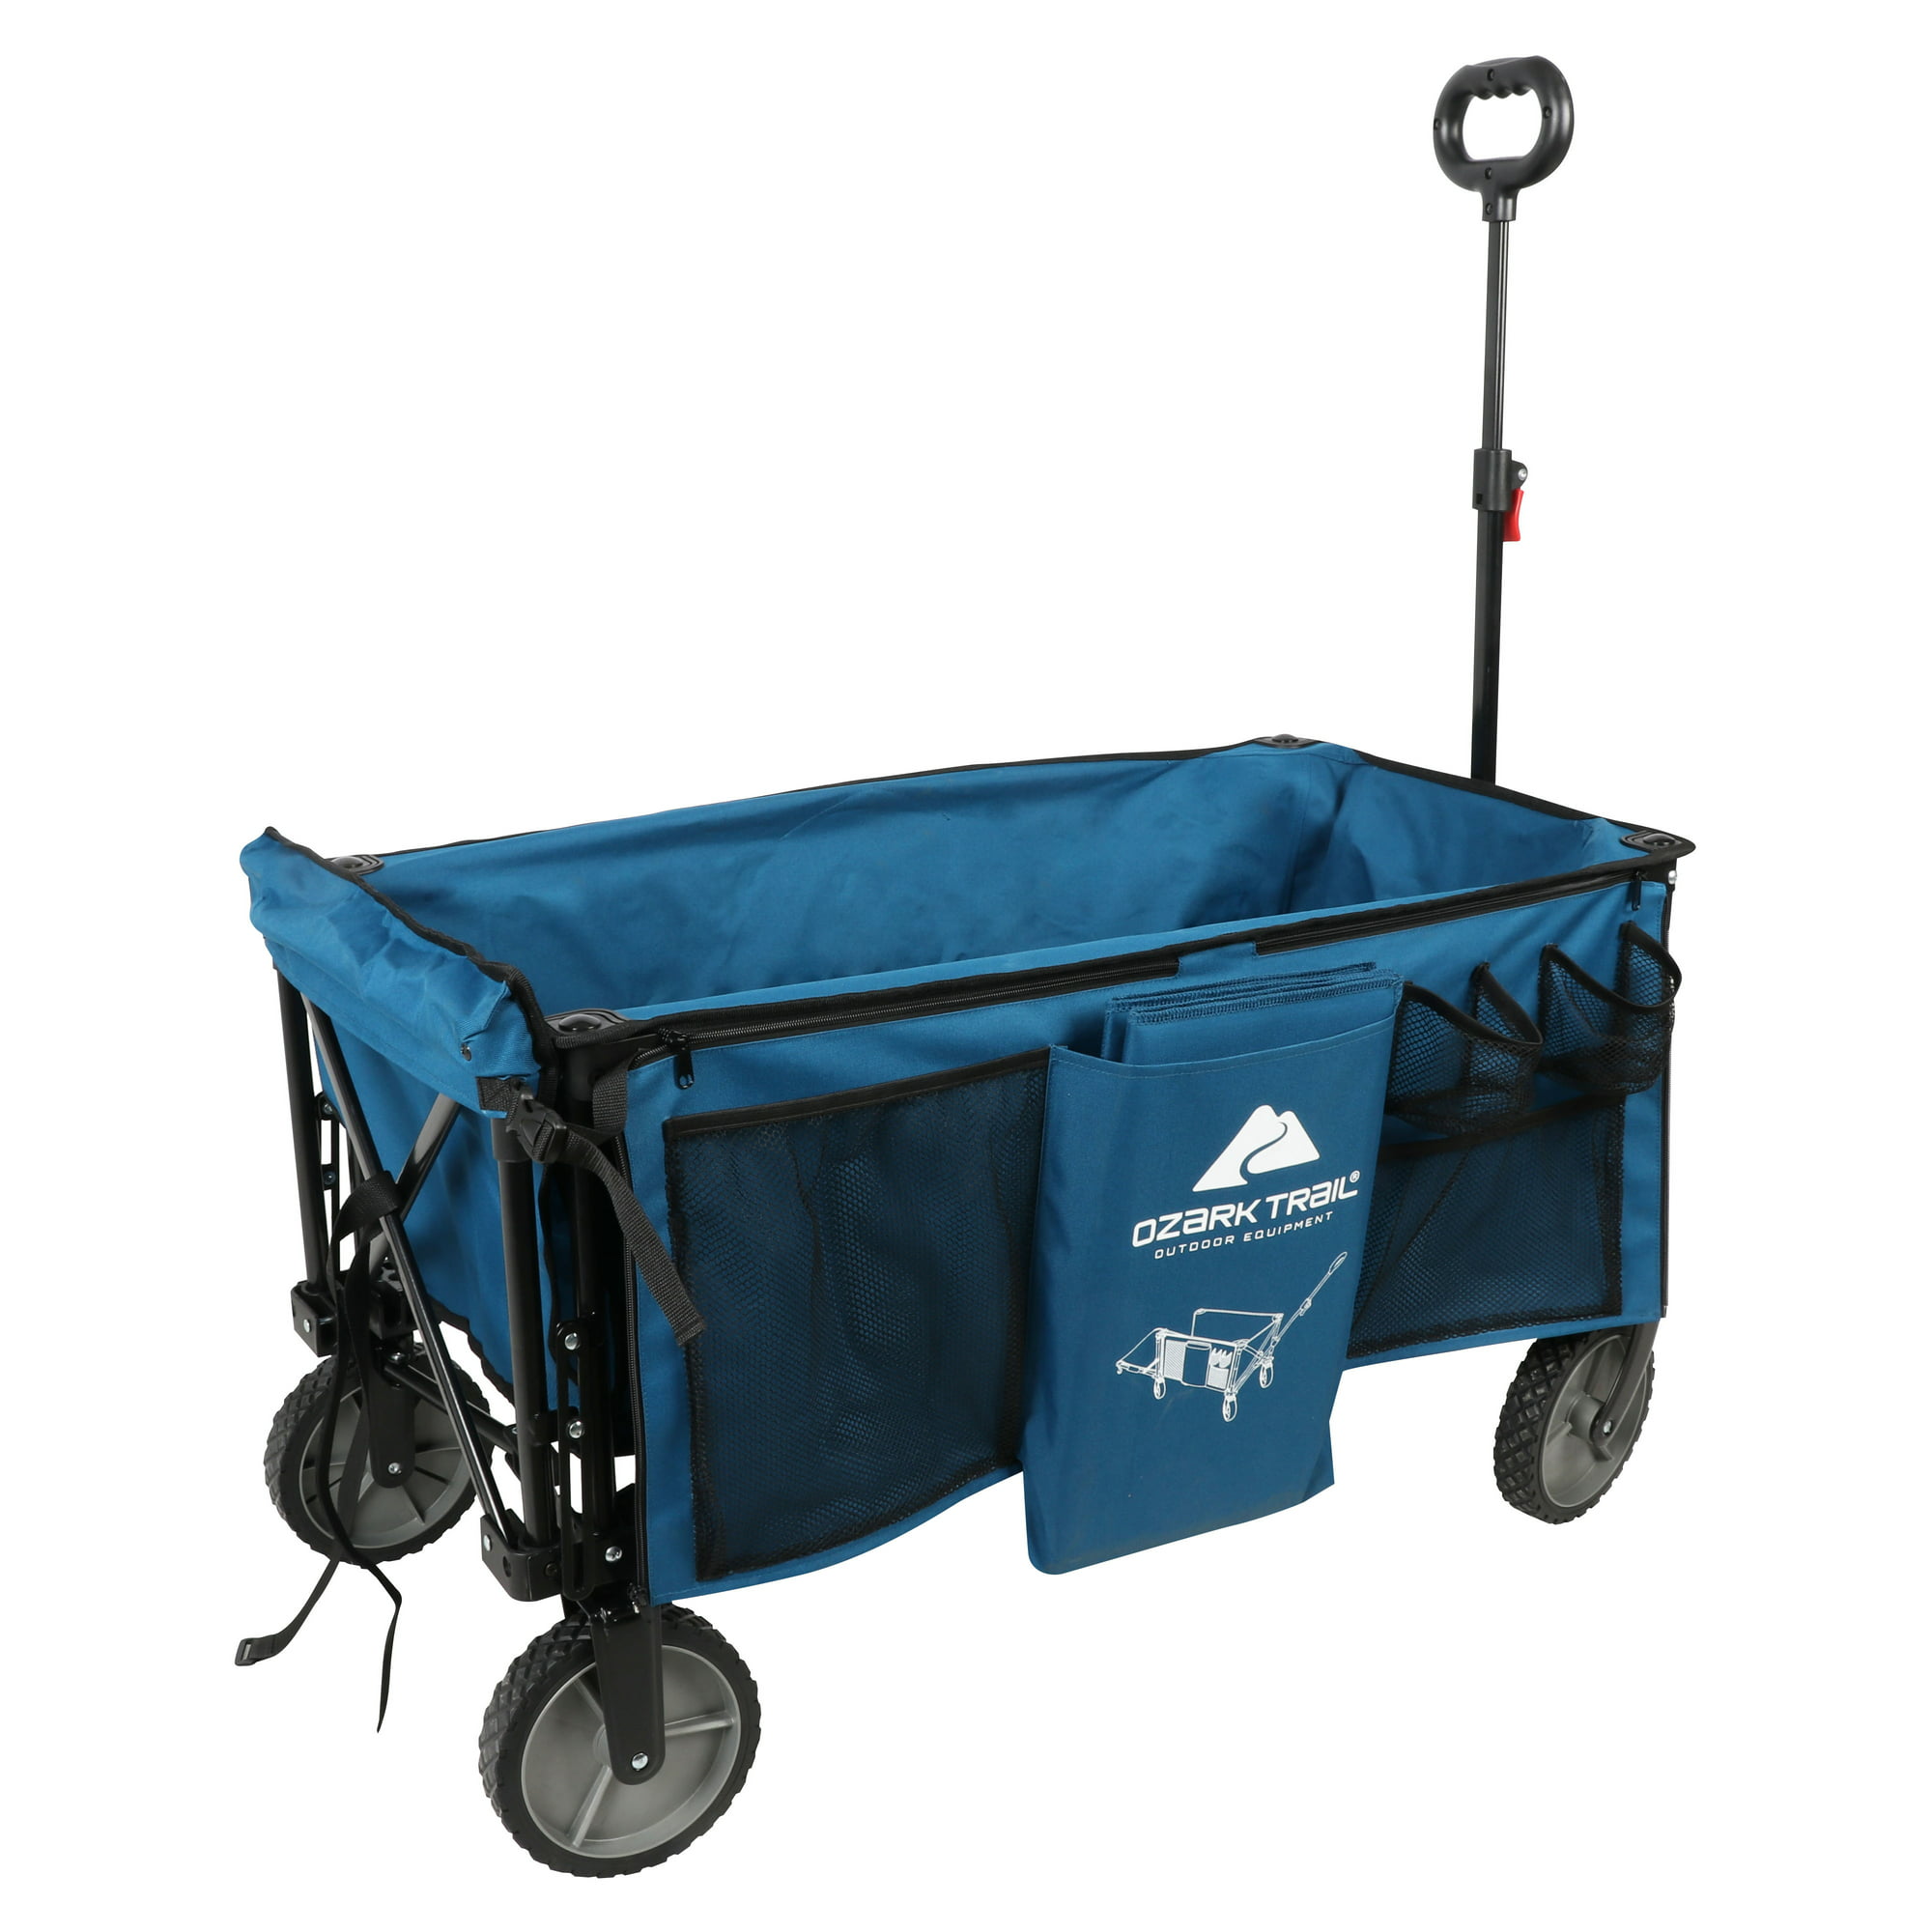 Ozark Trail Quad Folding Camp Wagon w/ Tailgate & Side Storage (Blue) $45 + Free Shipping